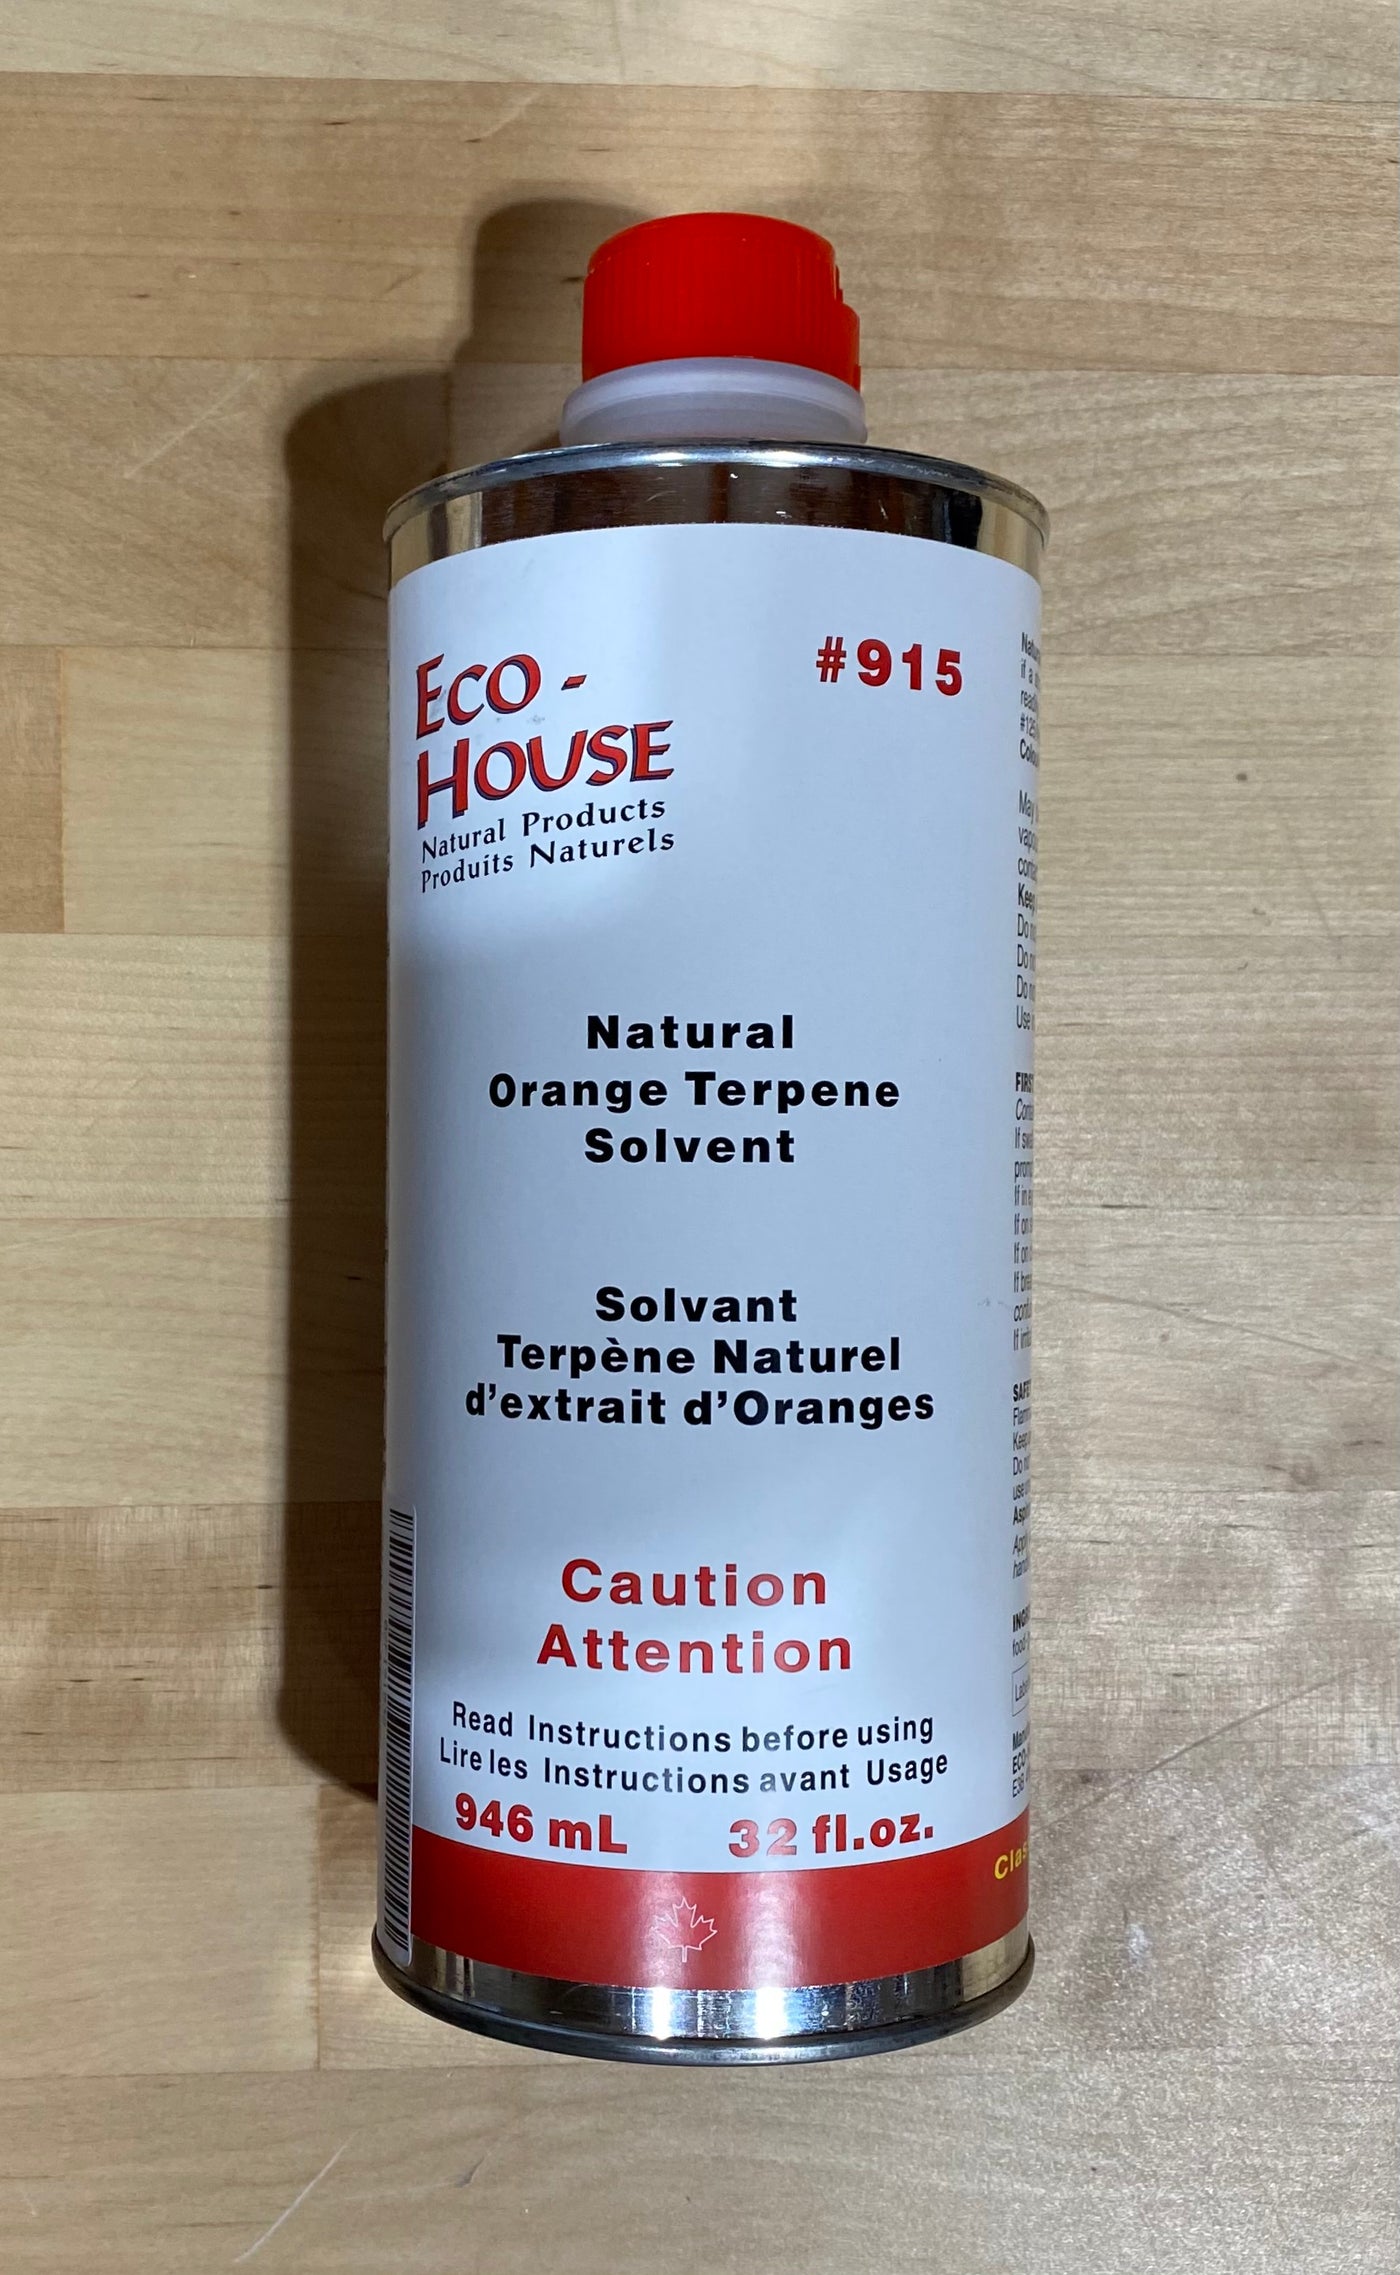 Natural Orange Terpene Solvent